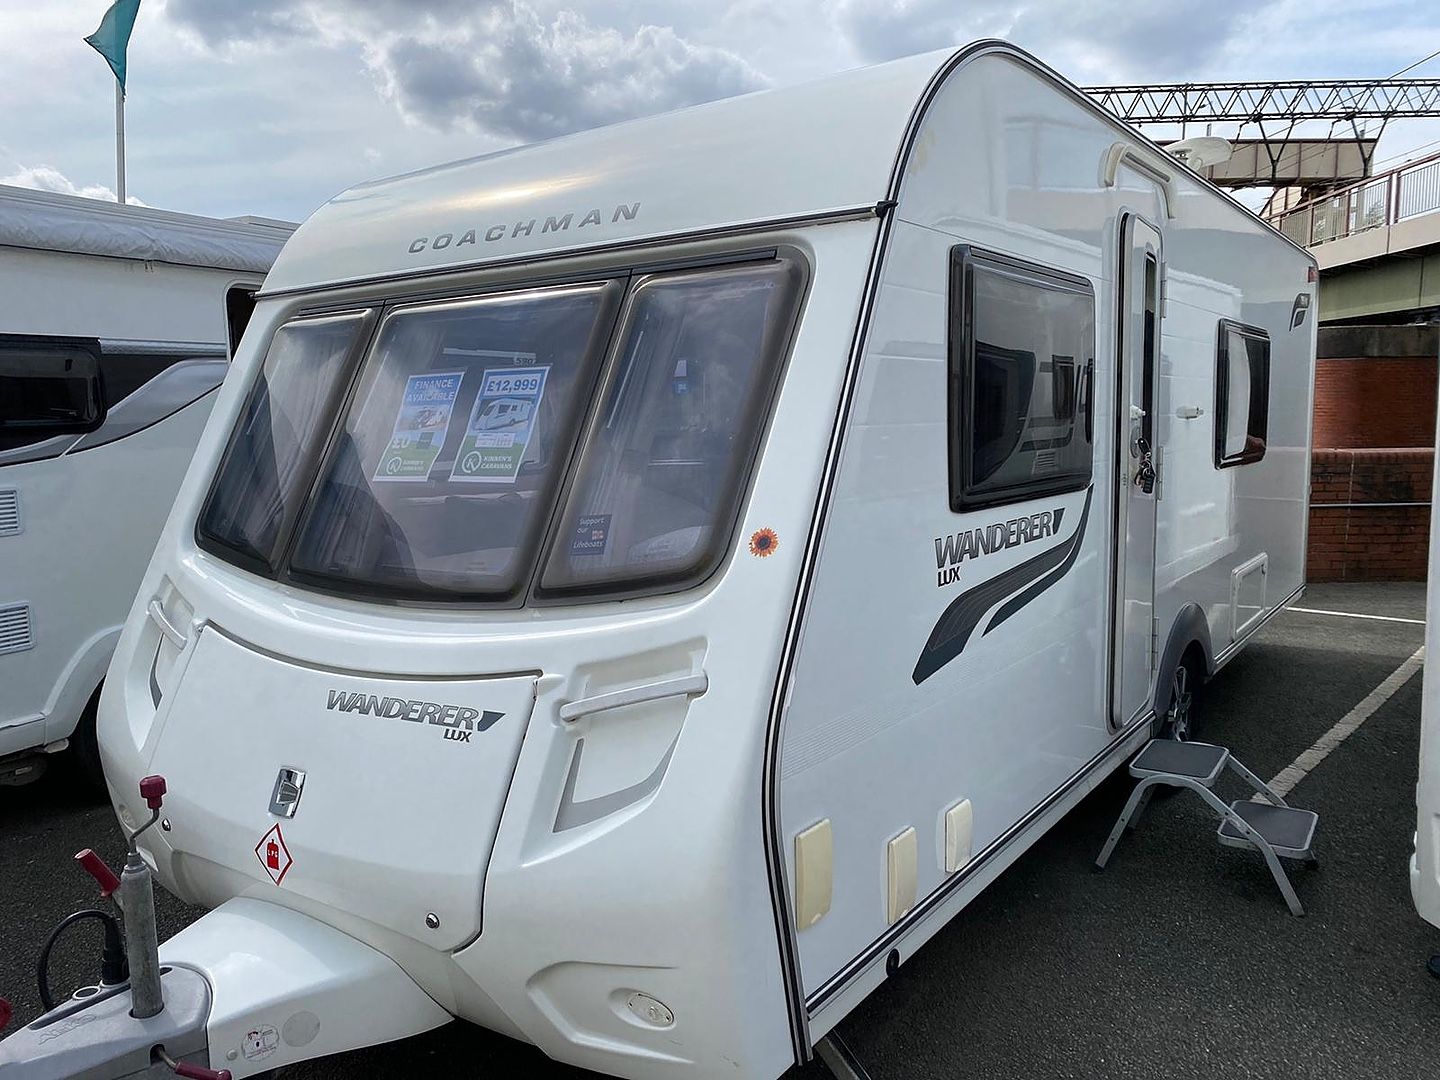 CoachmanWanderer LuxTouring Caravan for sale